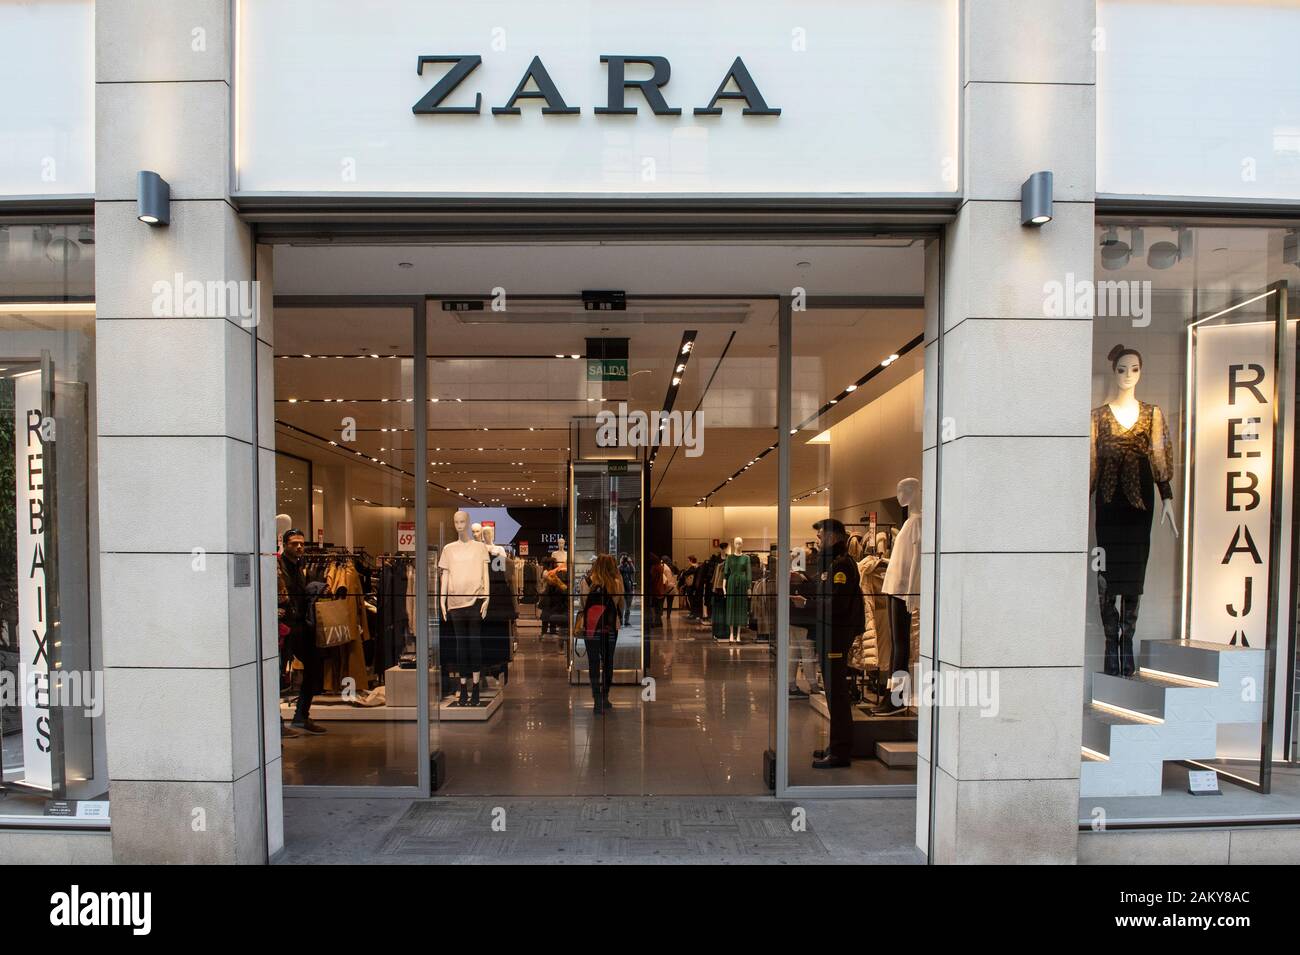 Zara Clothing Company Store, 58% OFF | www.ingeniovirtual.com